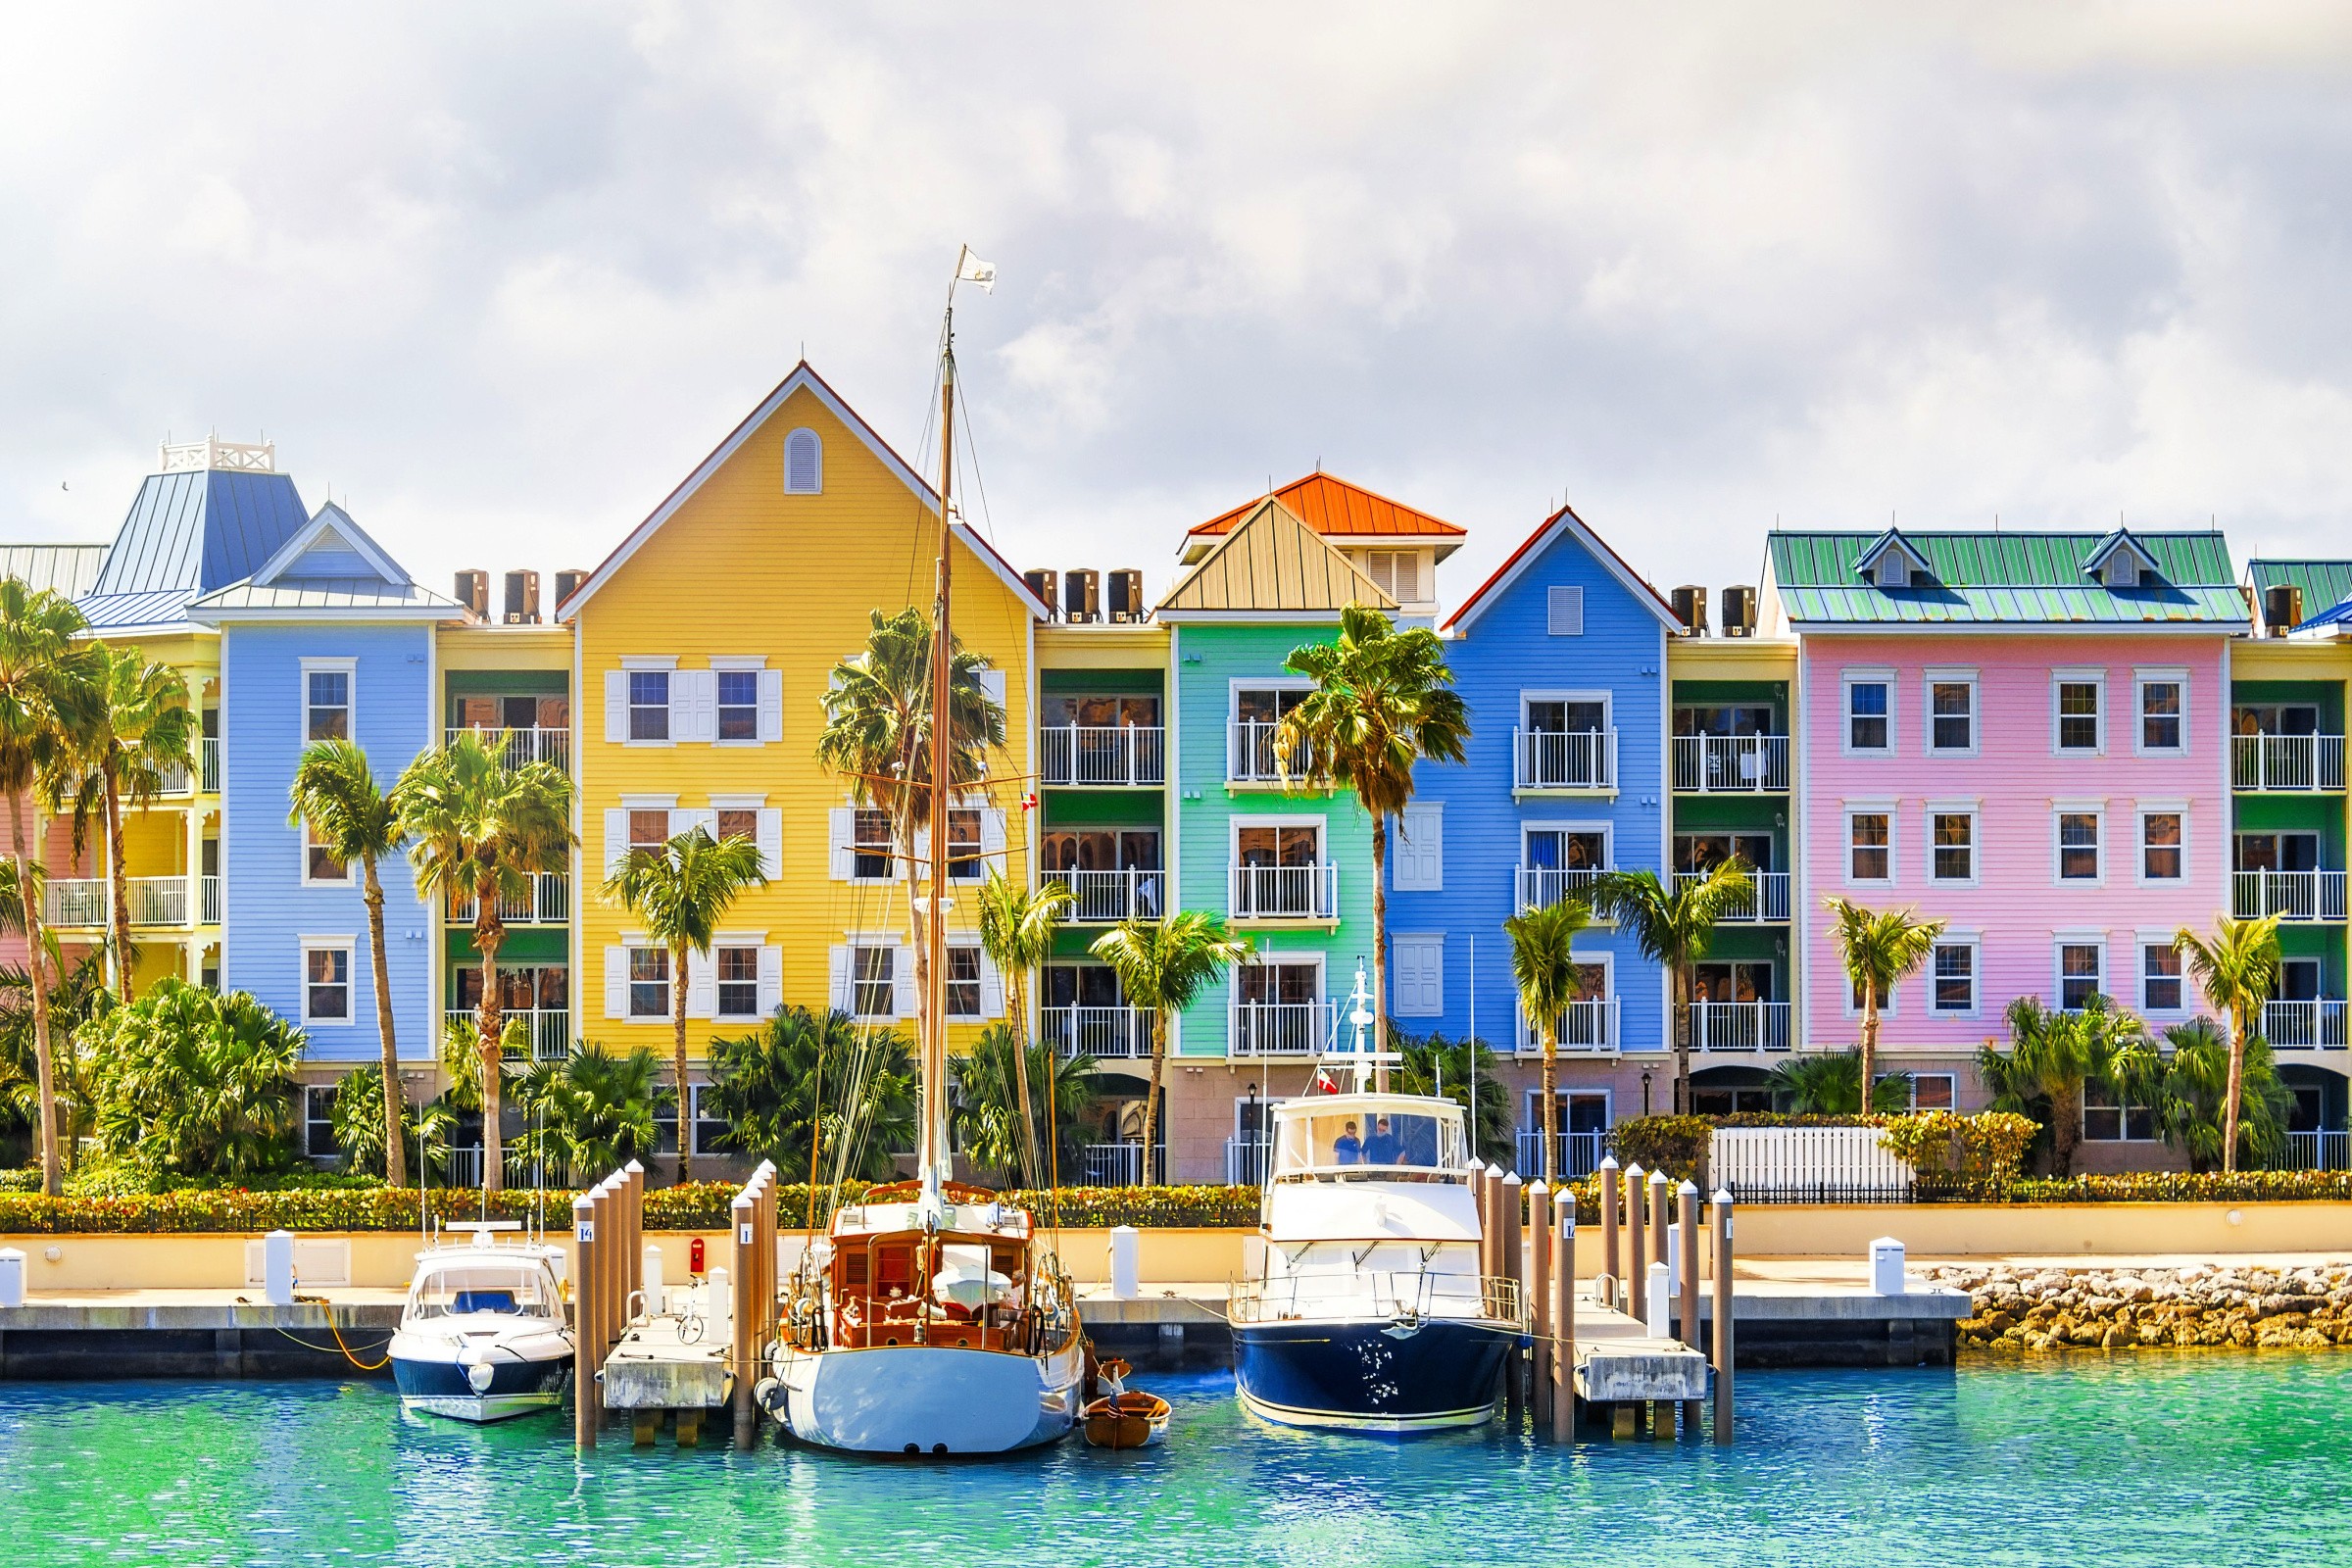 Nassau – The Glorious Capital